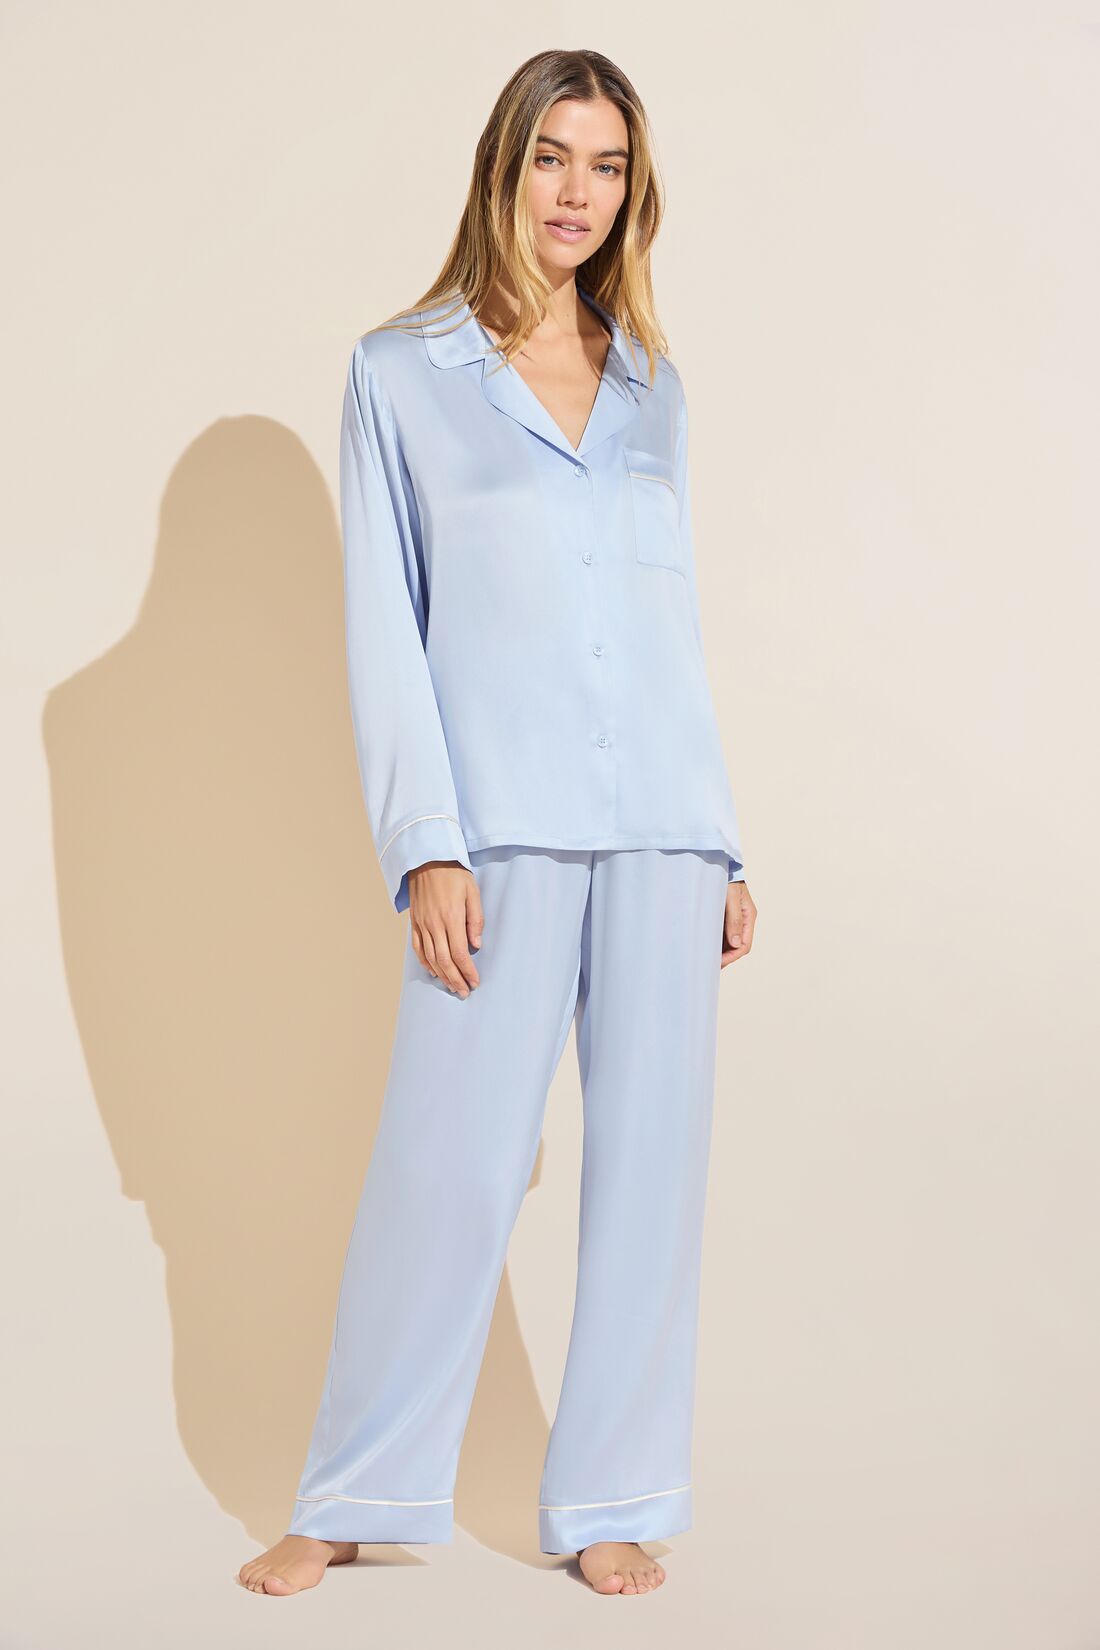 Women's Beautifully Soft Pajama Pants - Stars Above™ Light Blue S